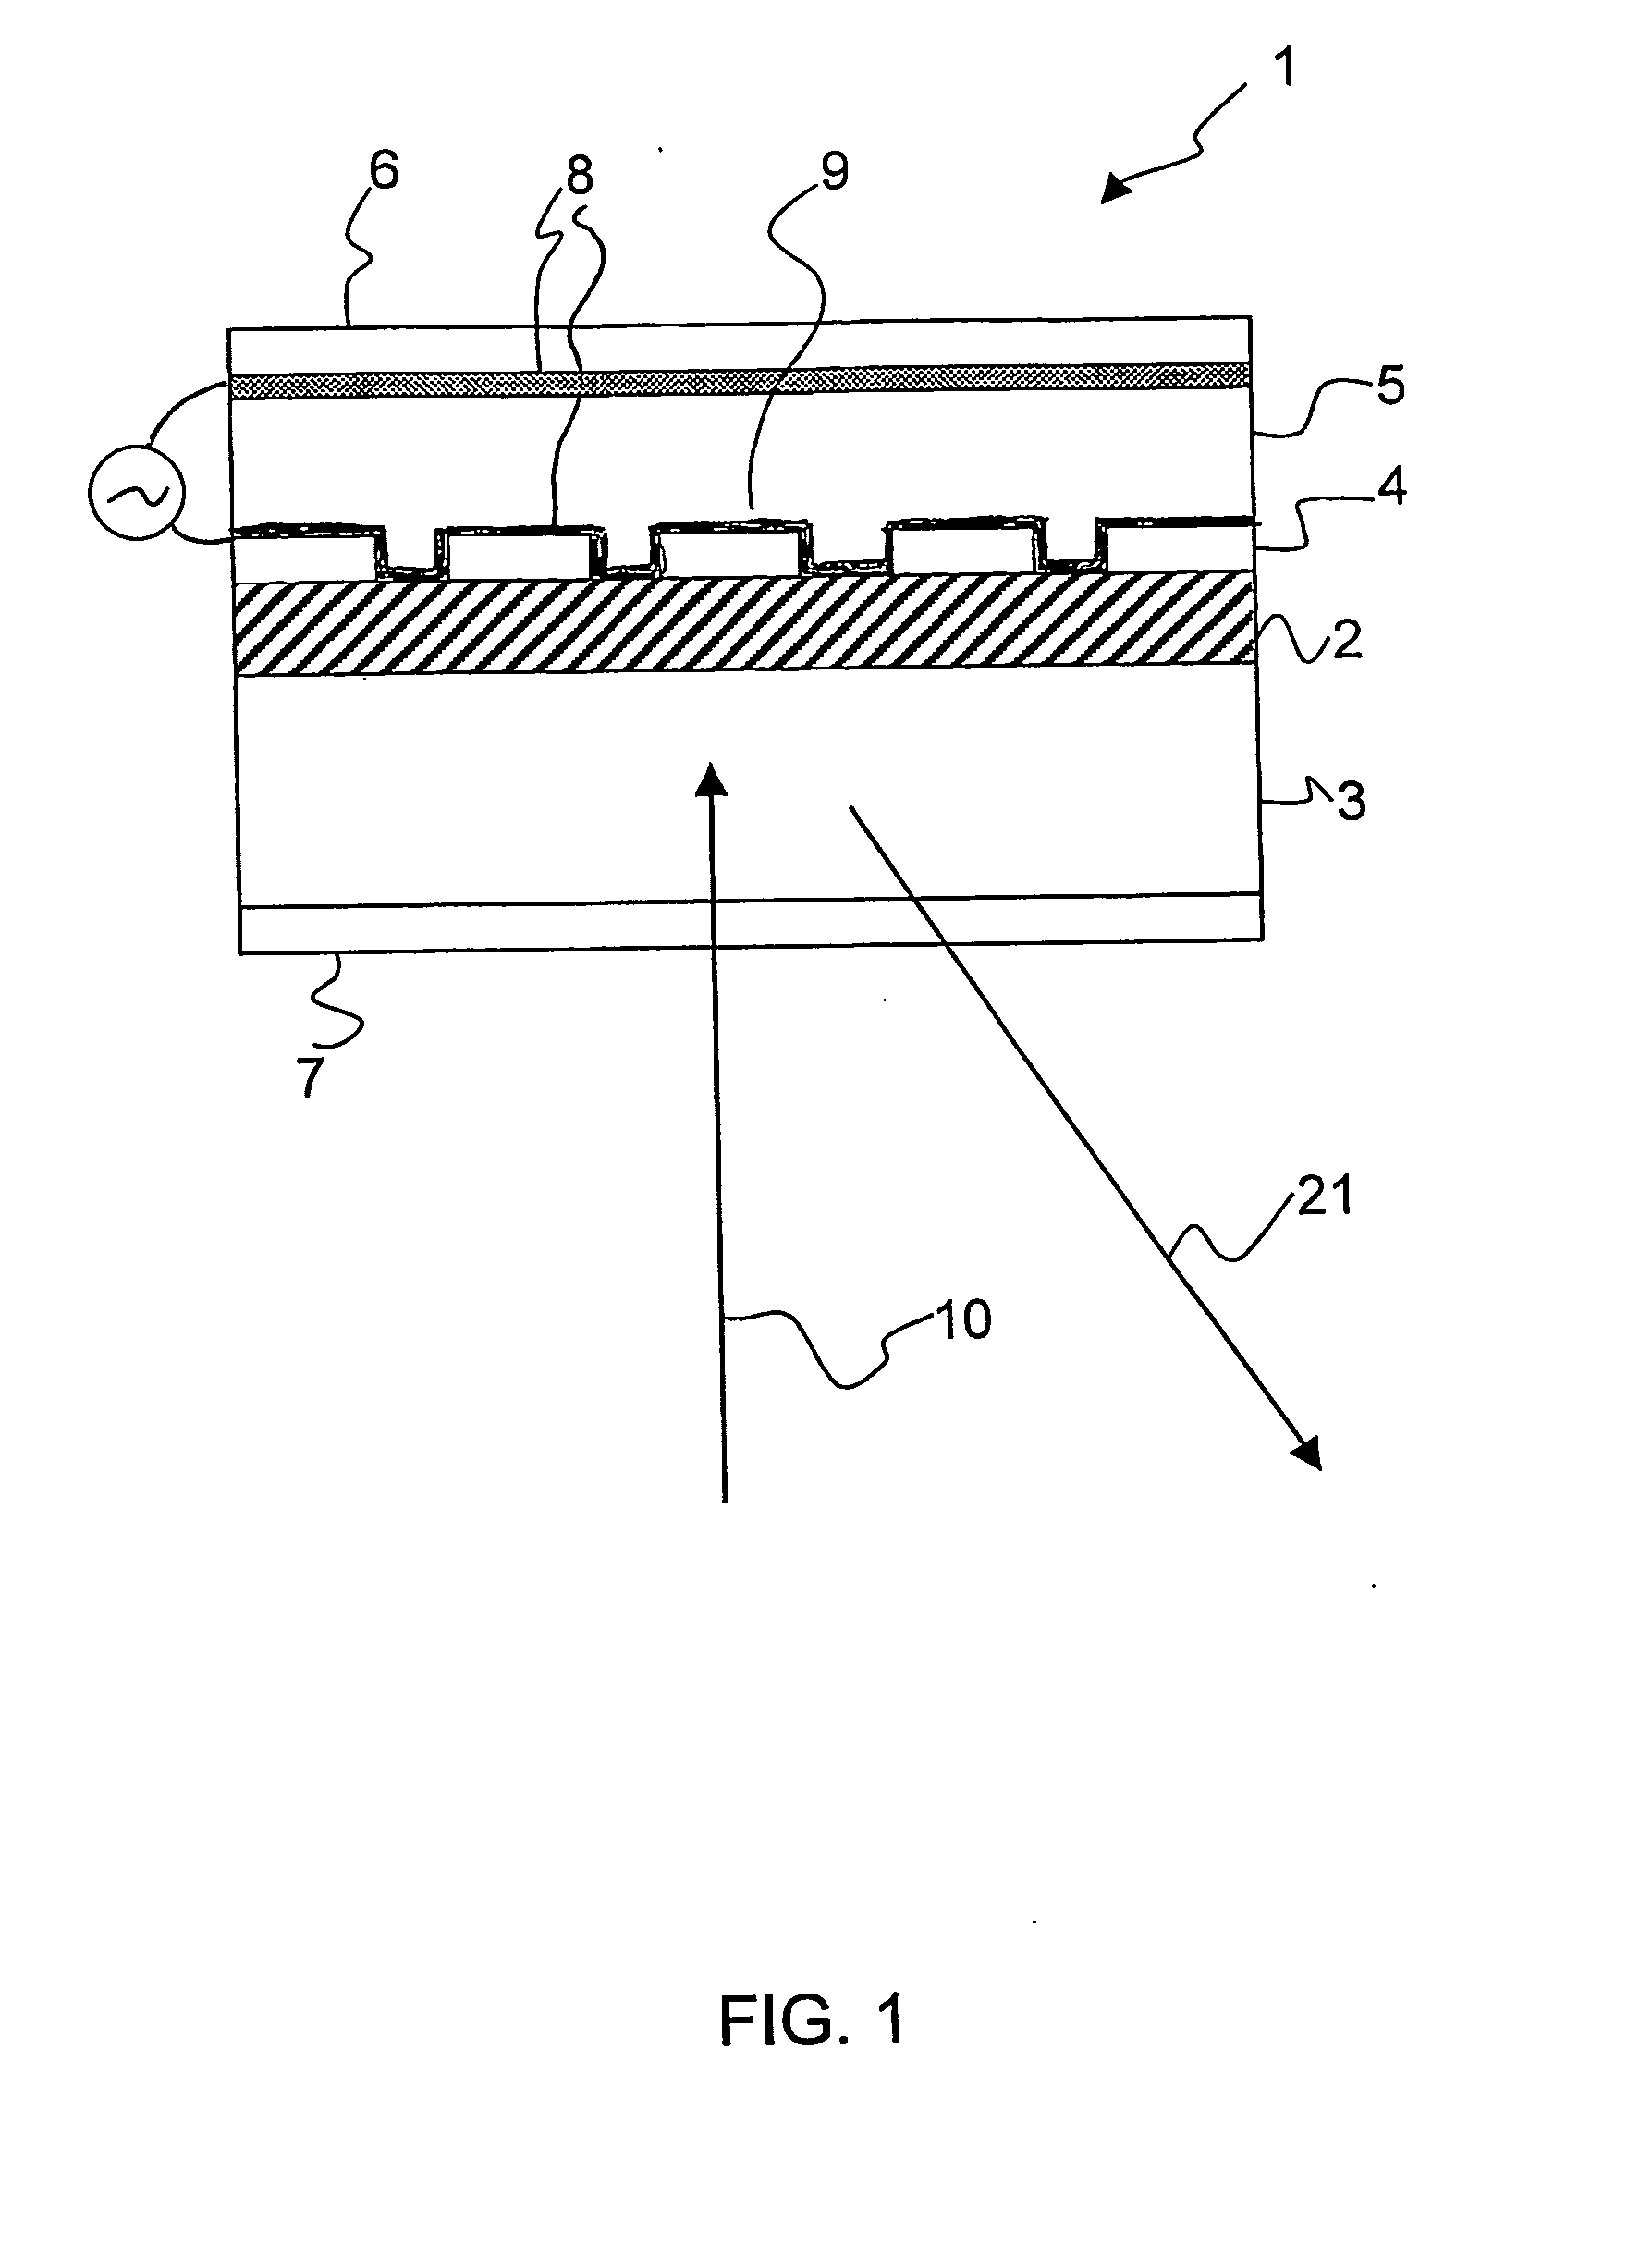 Wavelength Control of an External-Cavity Tuneable Laser